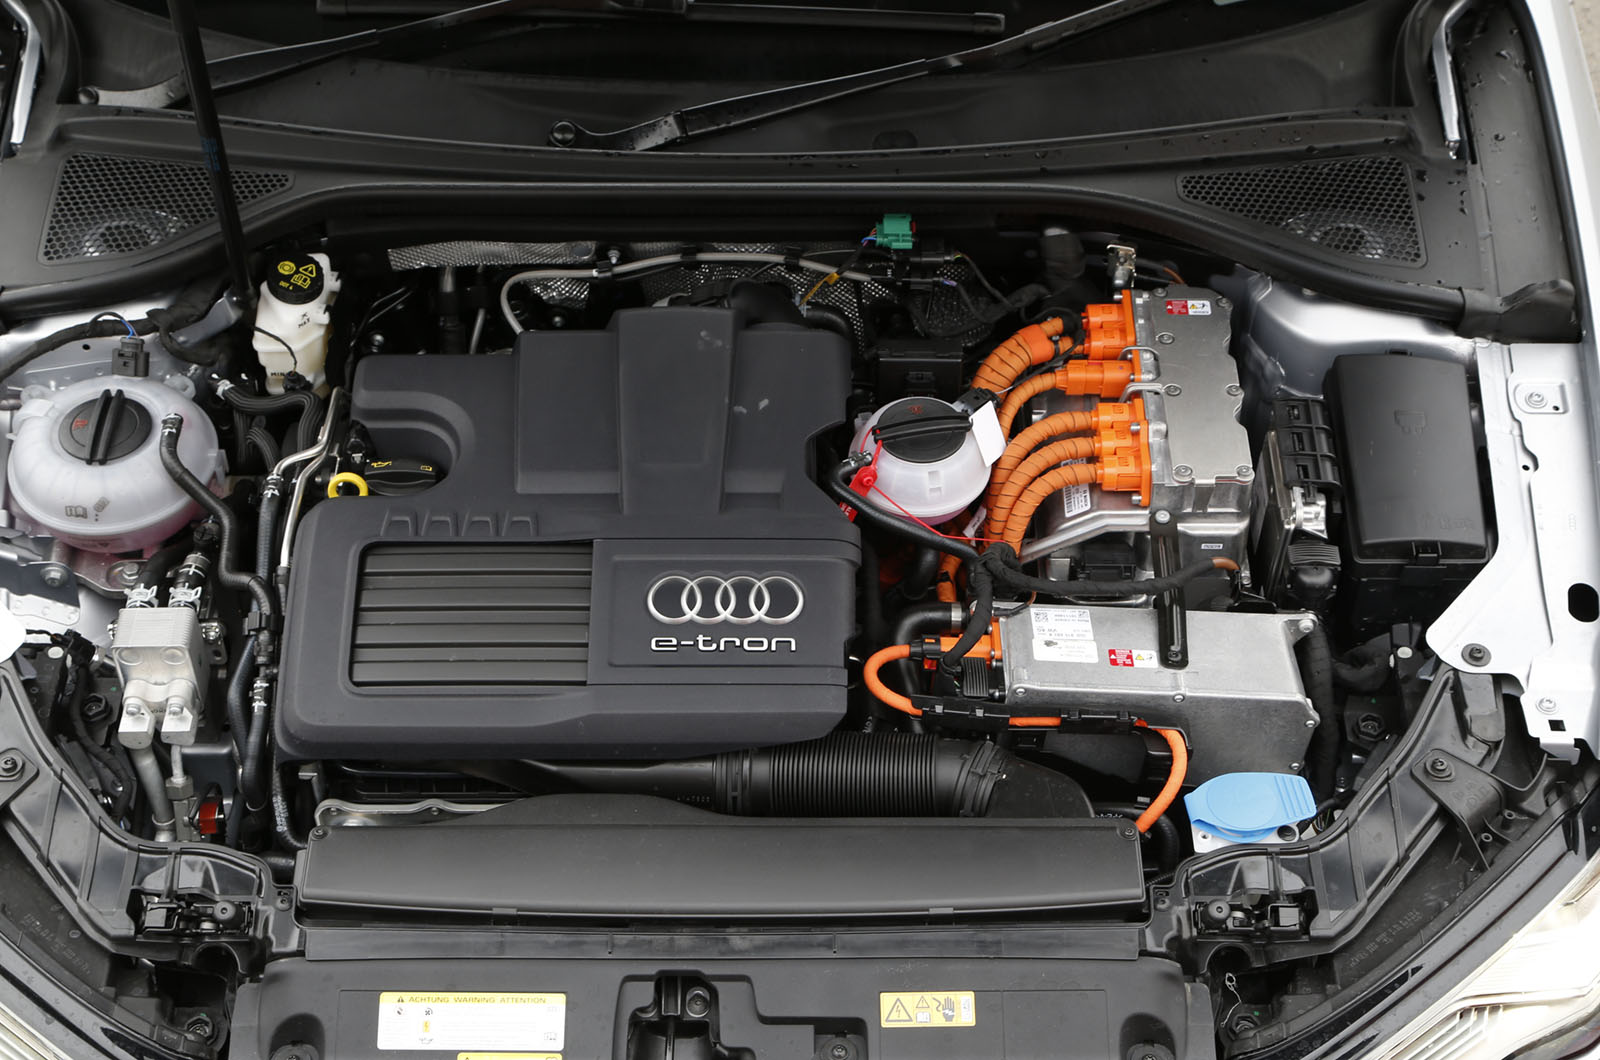 1.4-litre TFSI Audi A3 e-tron engine